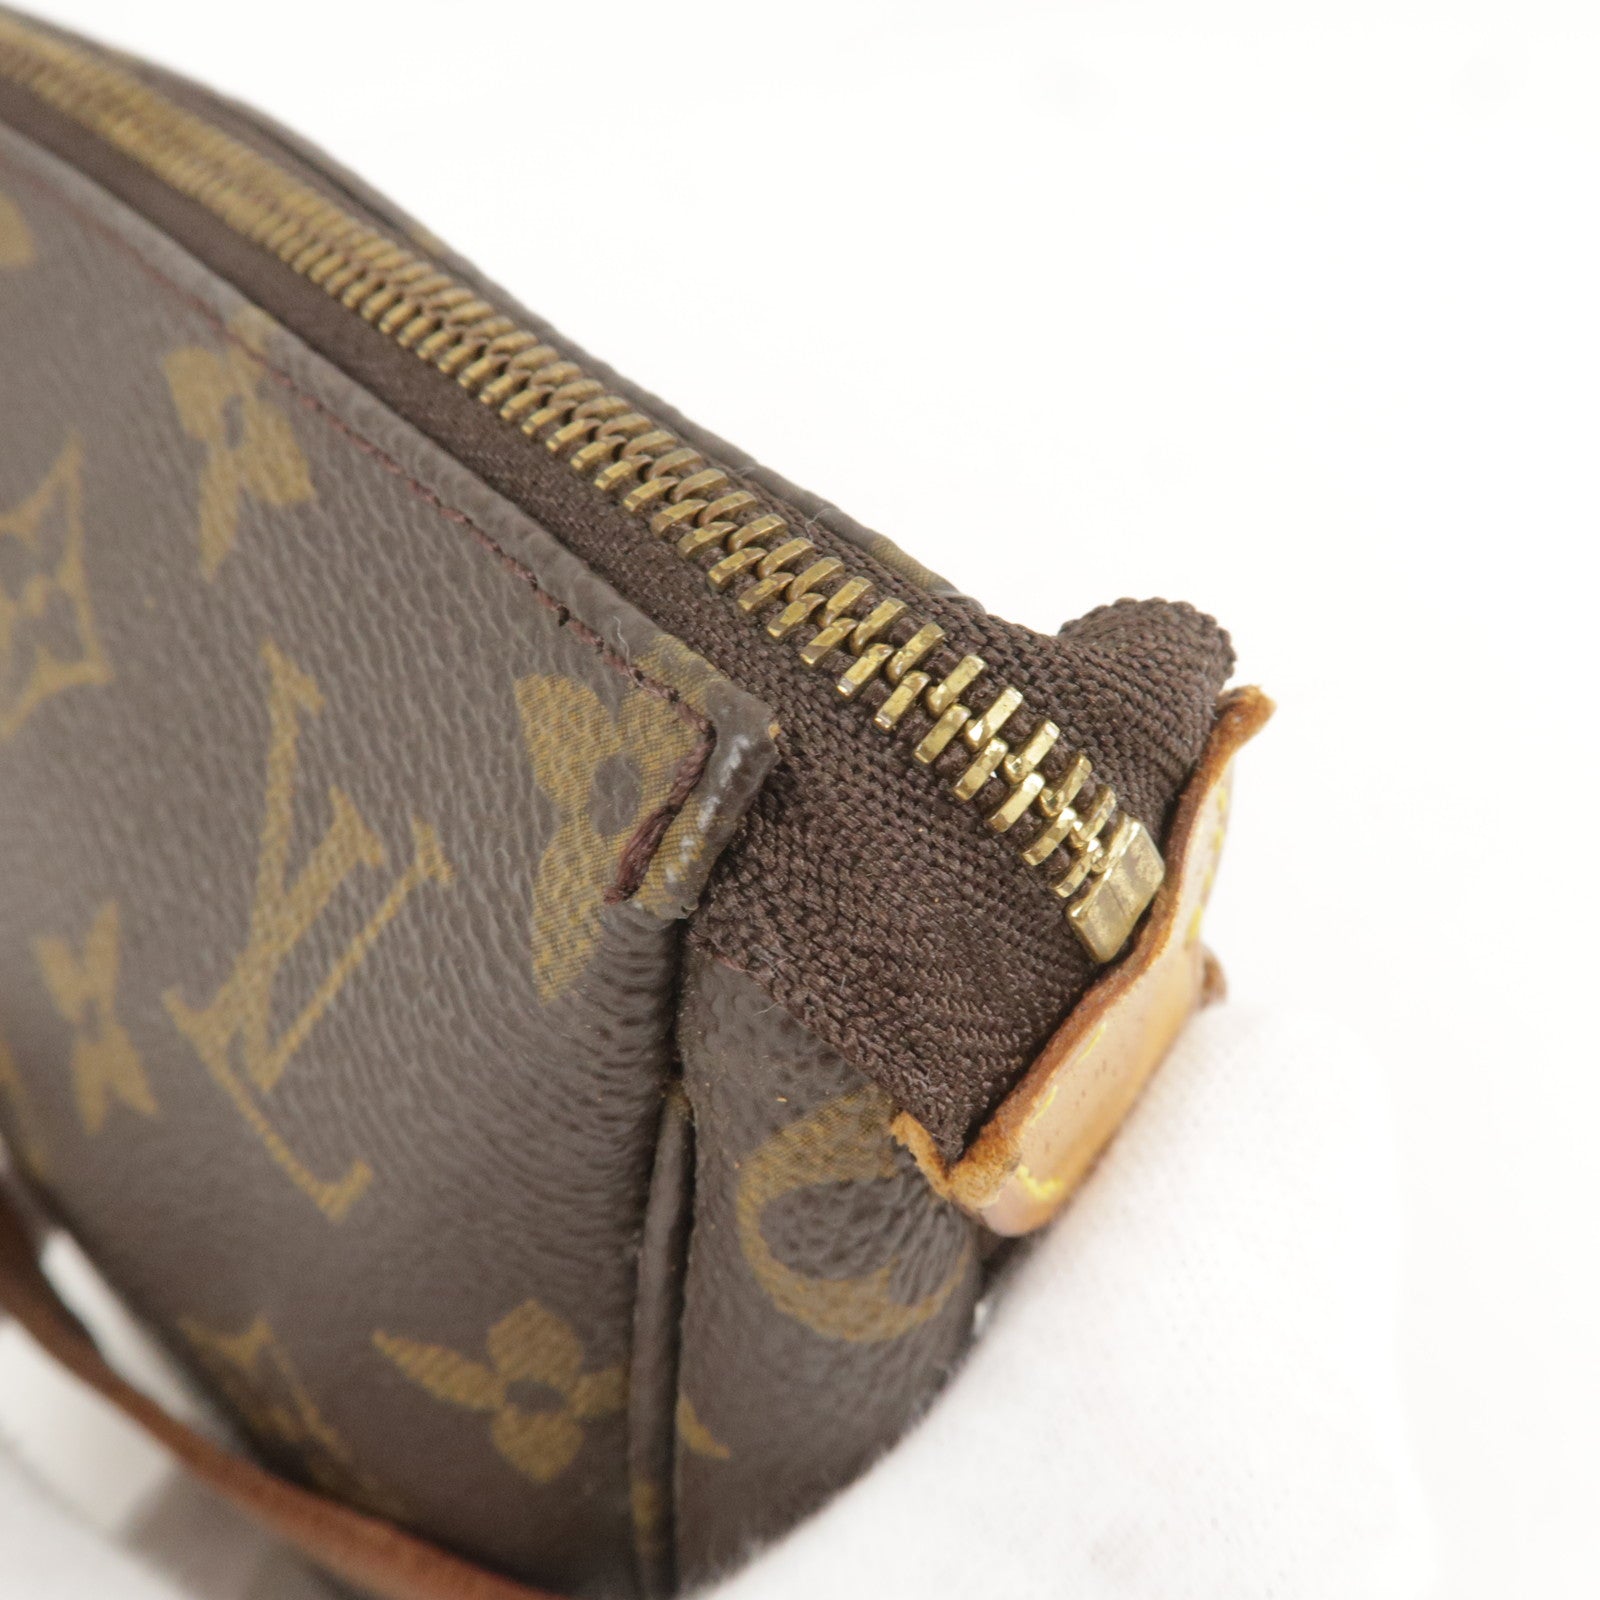 Buy Louis Vuitton monogram LOUIS VUITTON Pochette Accessoire Monogram M51980  Handbag Brown / 083341 [Used] from Japan - Buy authentic Plus exclusive  items from Japan